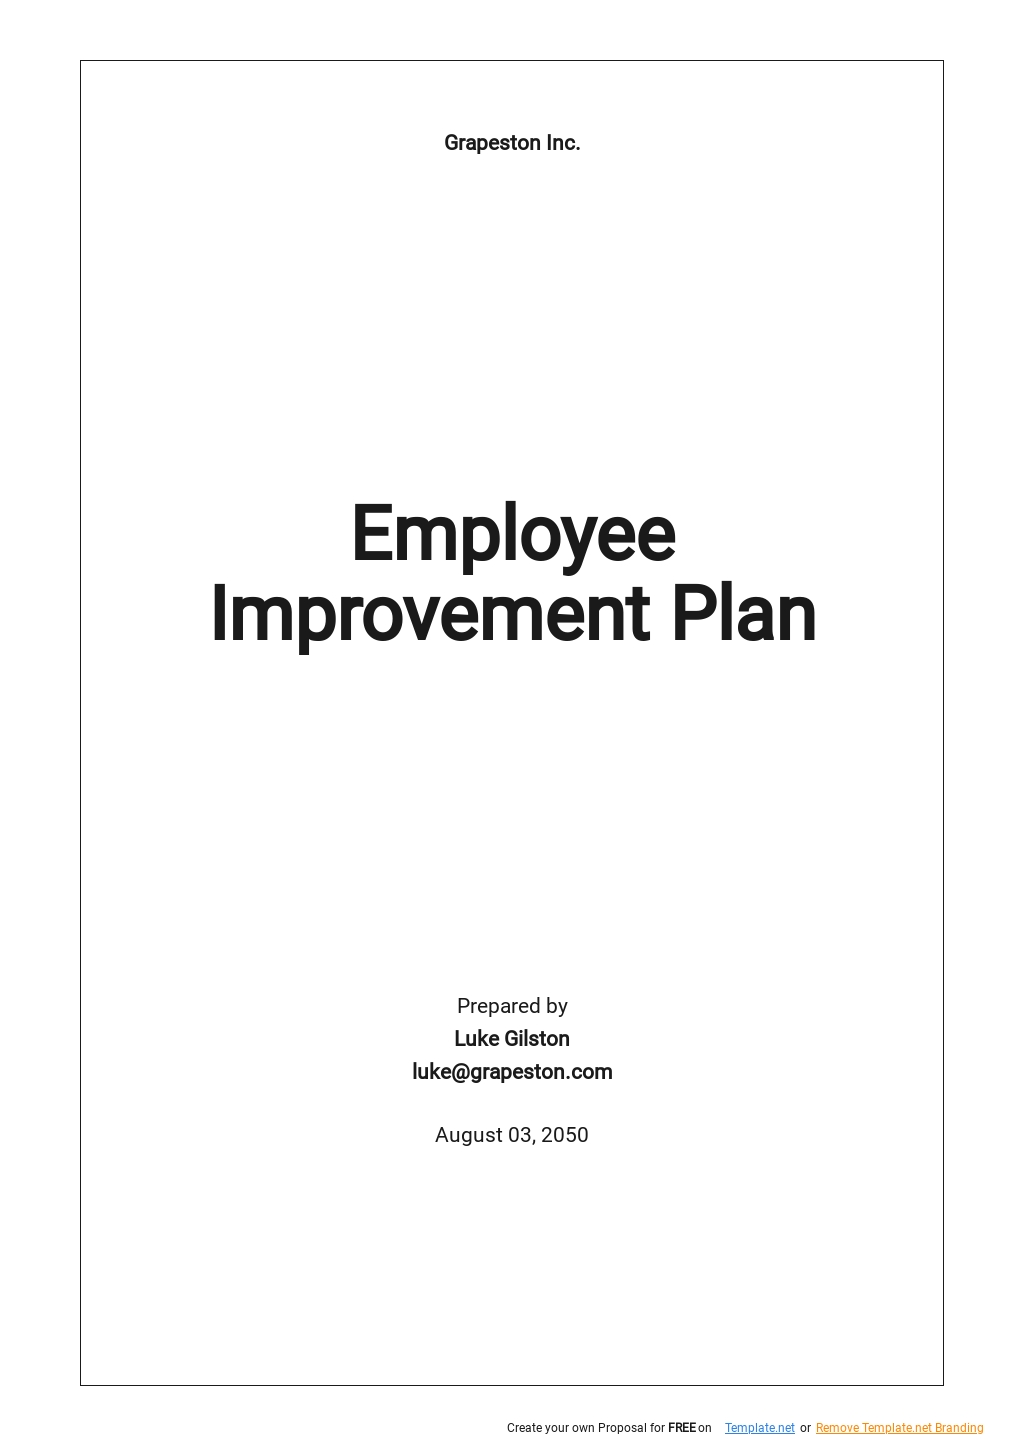 Simple Employee Improvement Plan Template.jpe